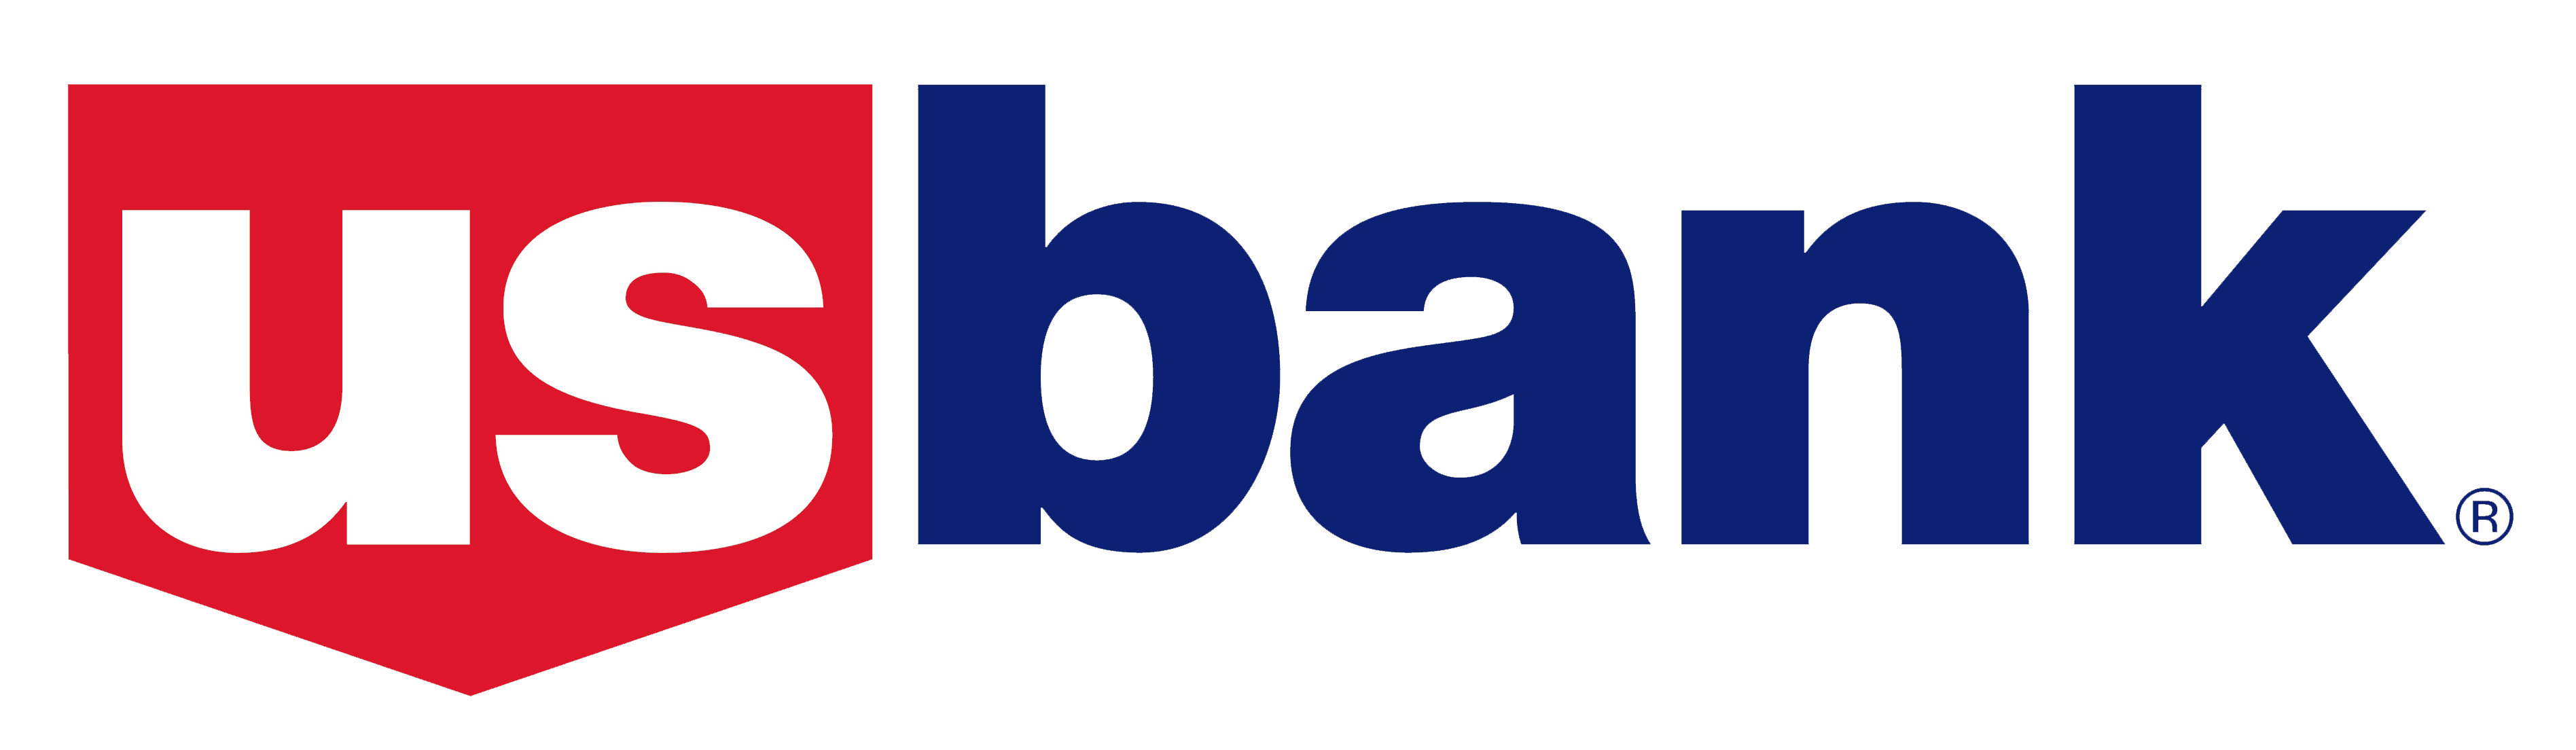 US Bank company logo.